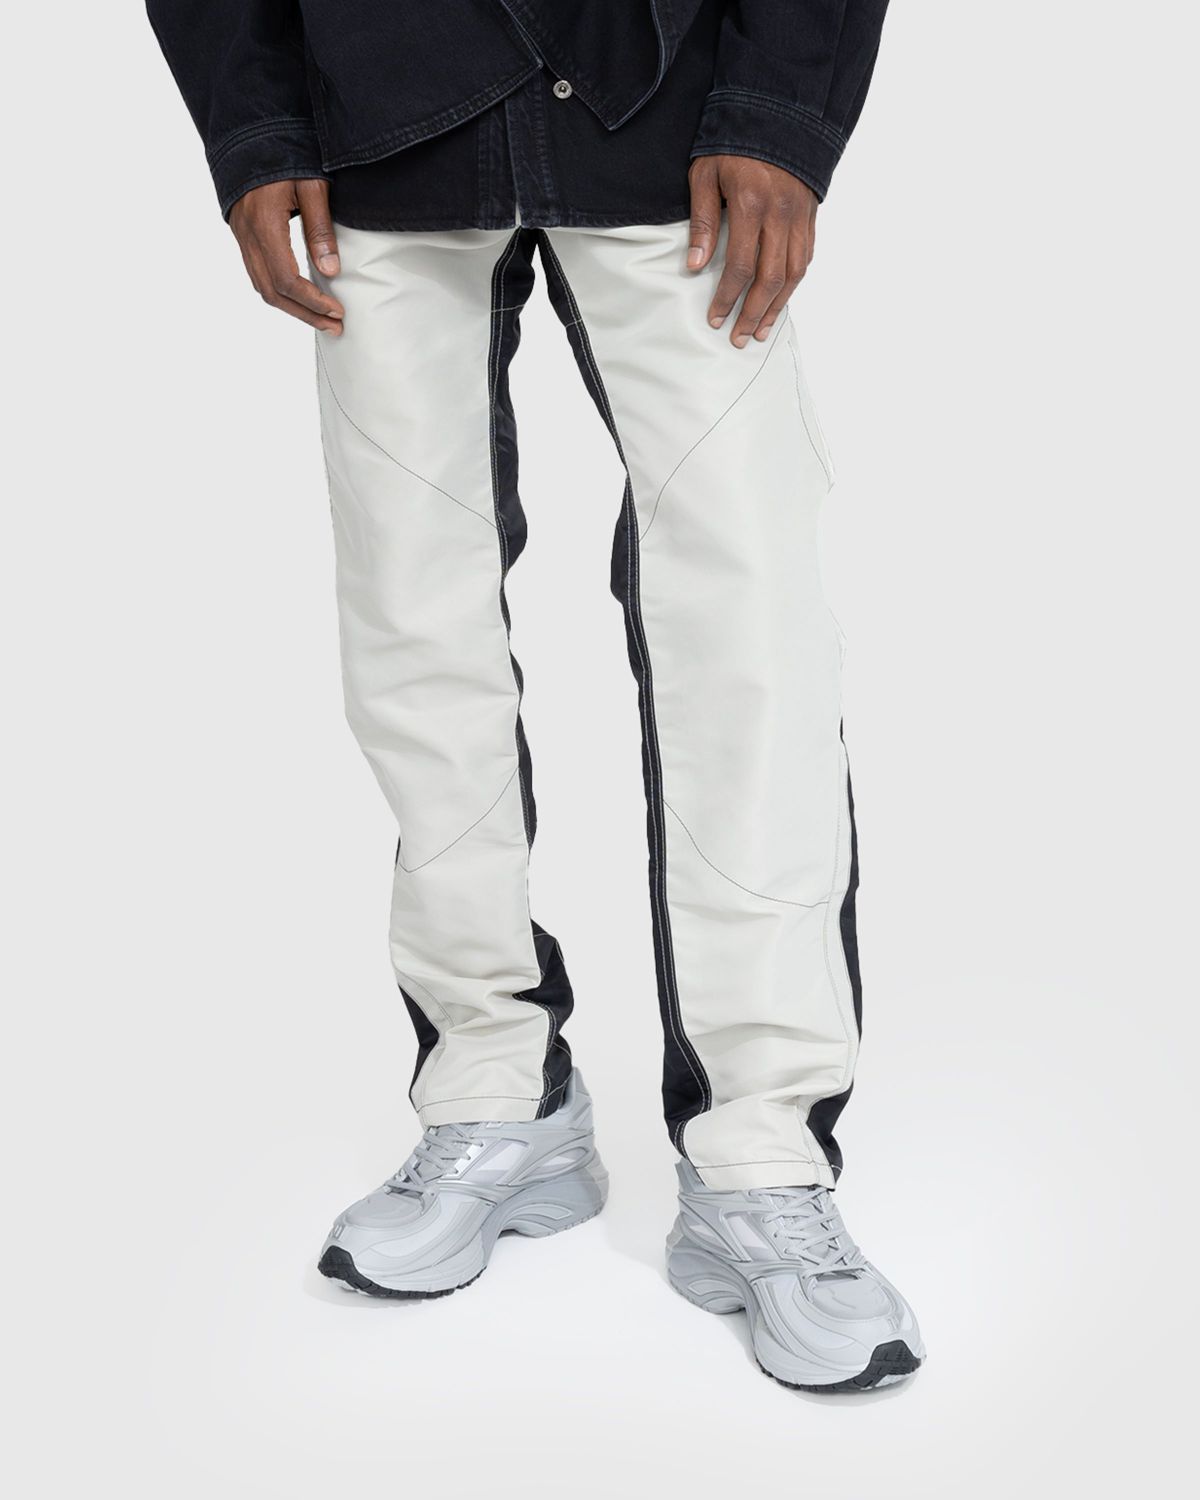 GmbH – Biker Trousers With Exposed Zips Black Grey - Pants - Multi - Image 2